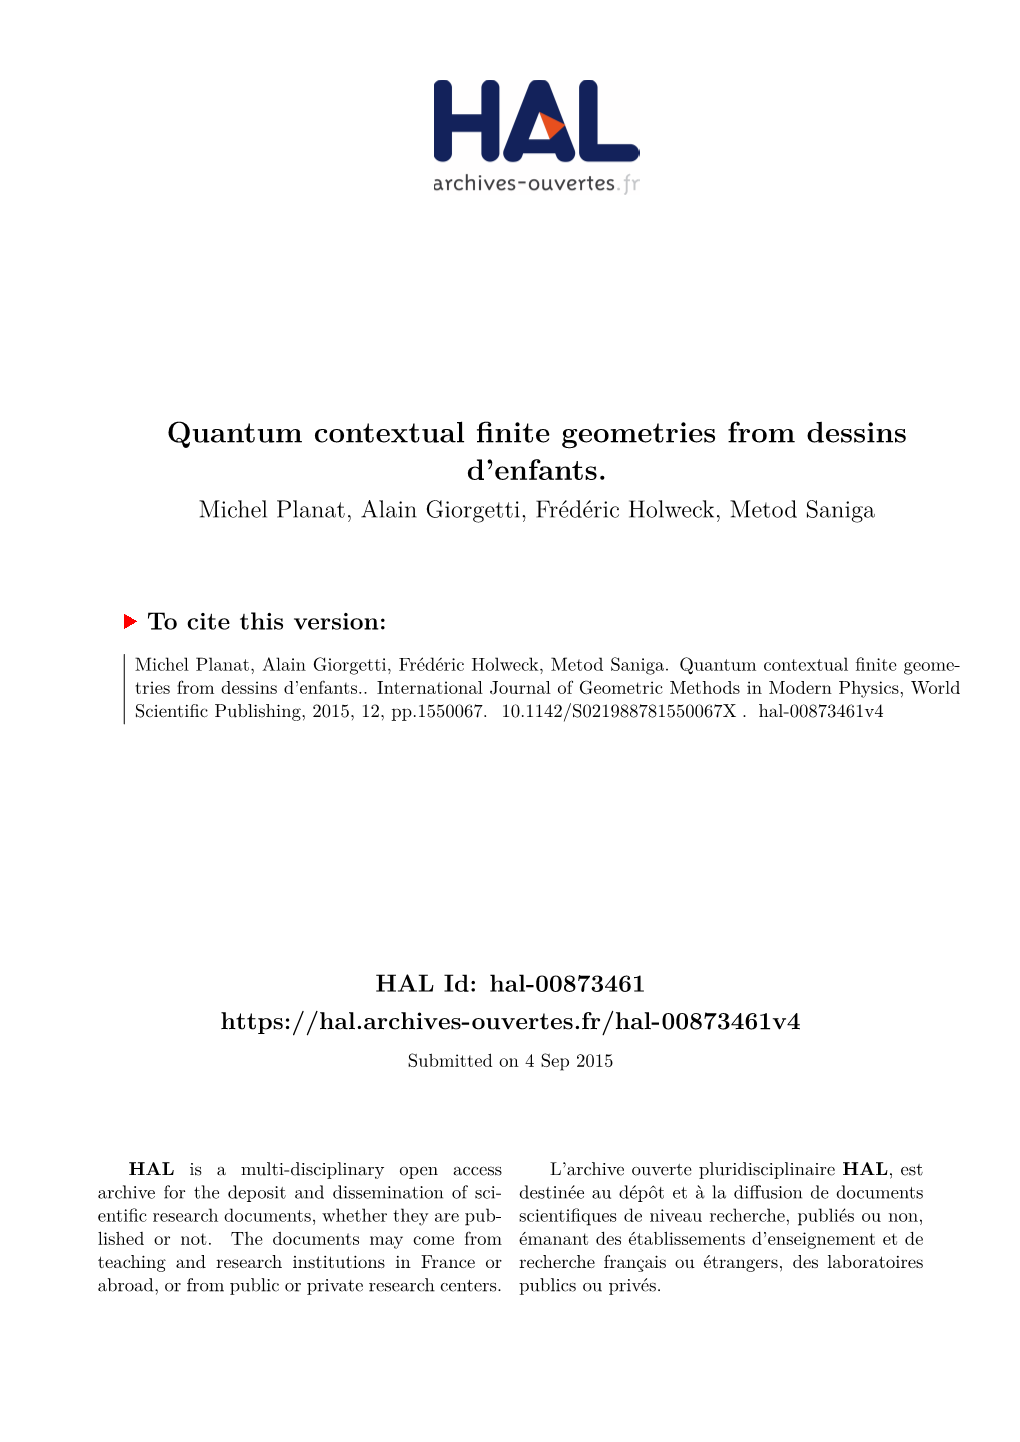 Quantum Contextual Finite Geometries from Dessins D'enfants